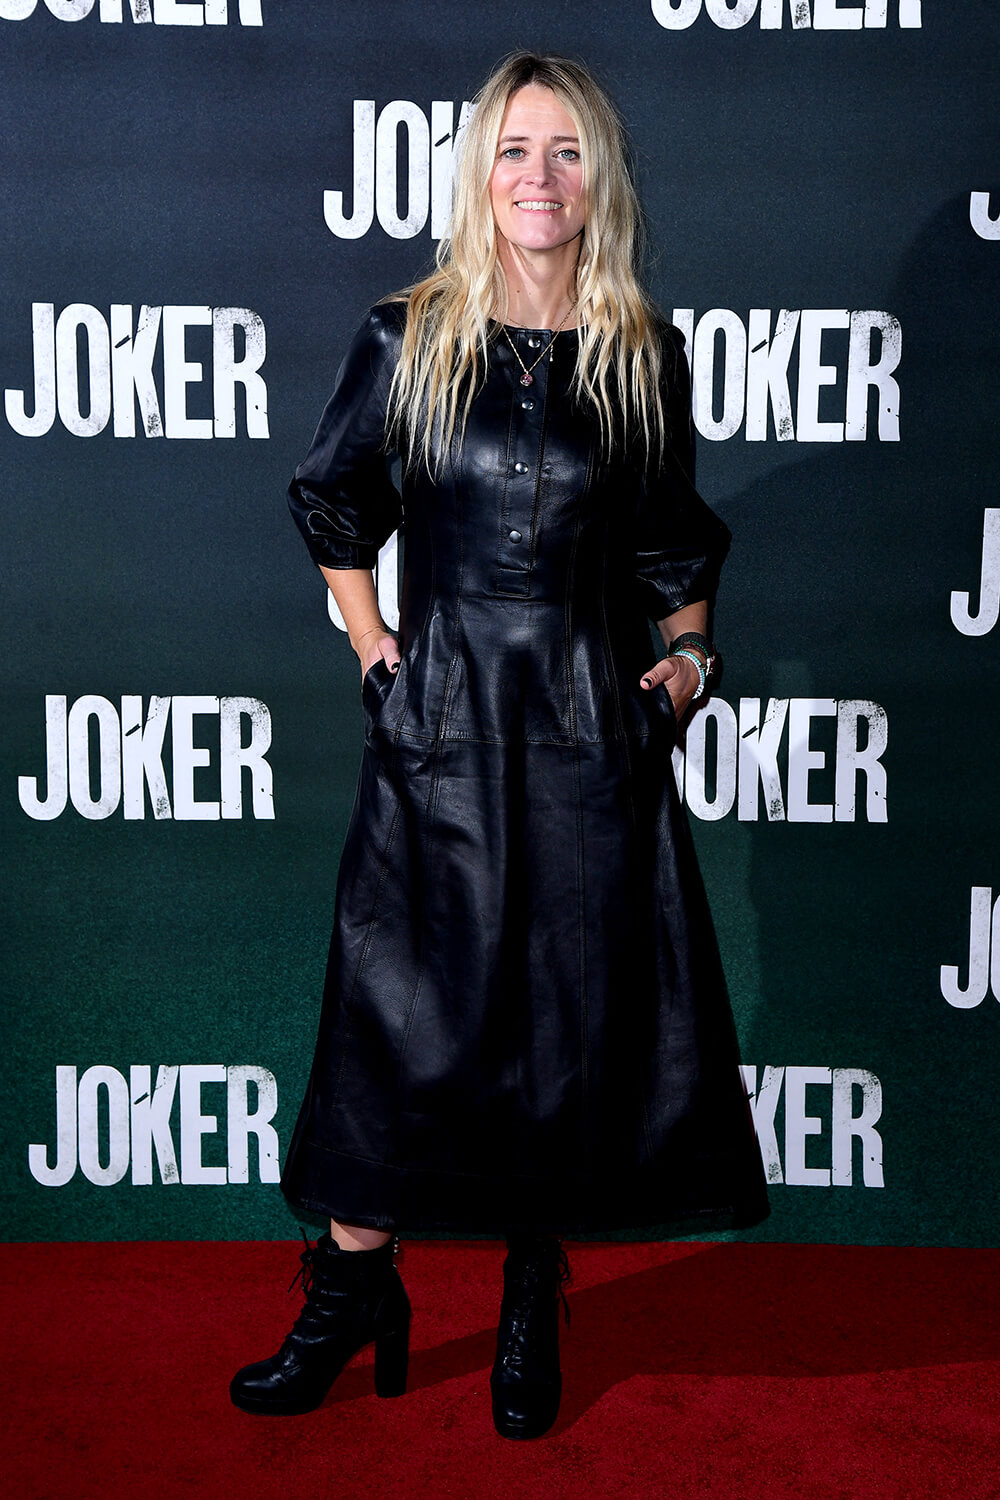 Edith Bowman attending a special screening of the Joker